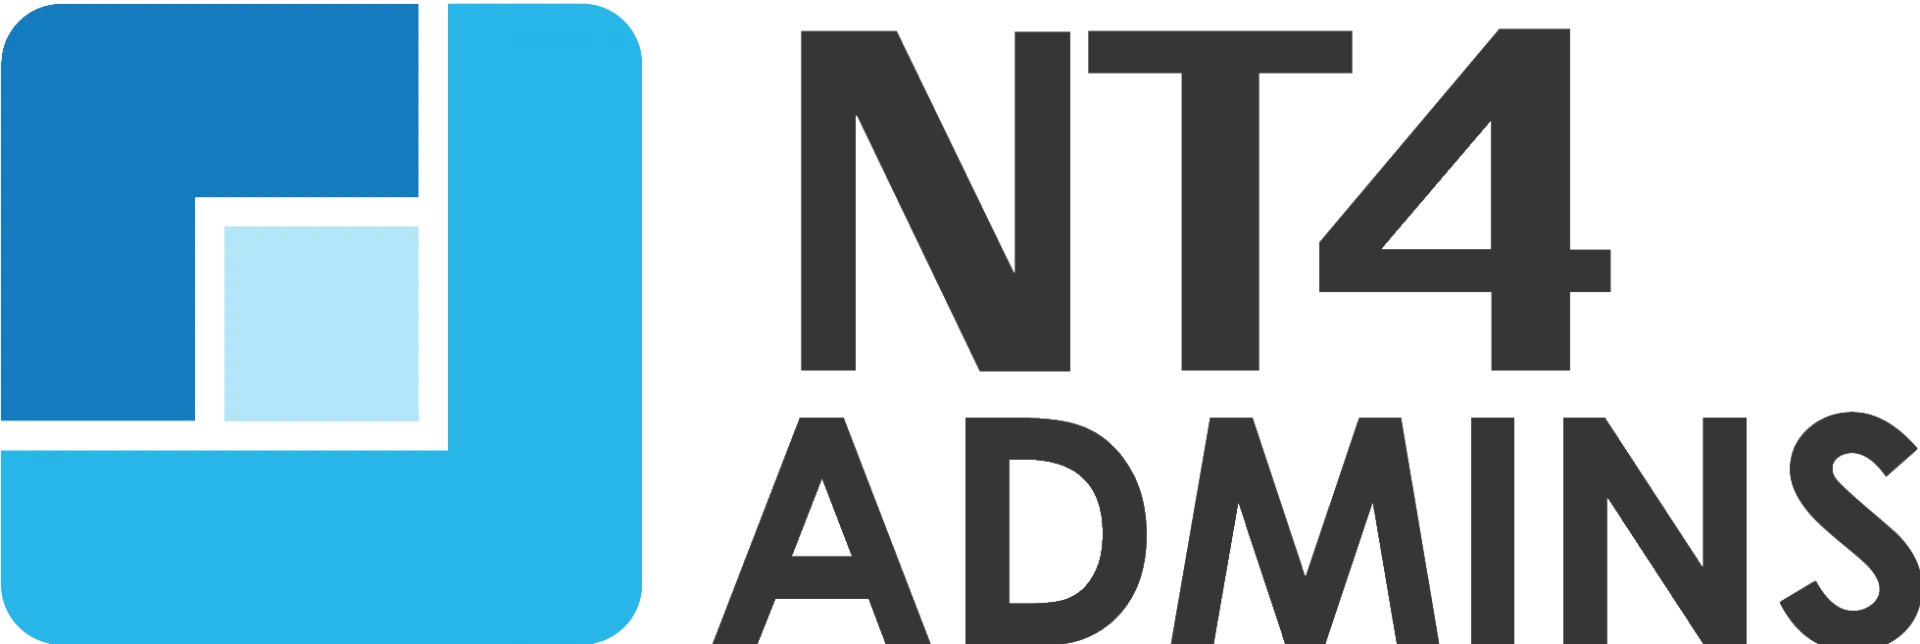 nt4-admins Logo